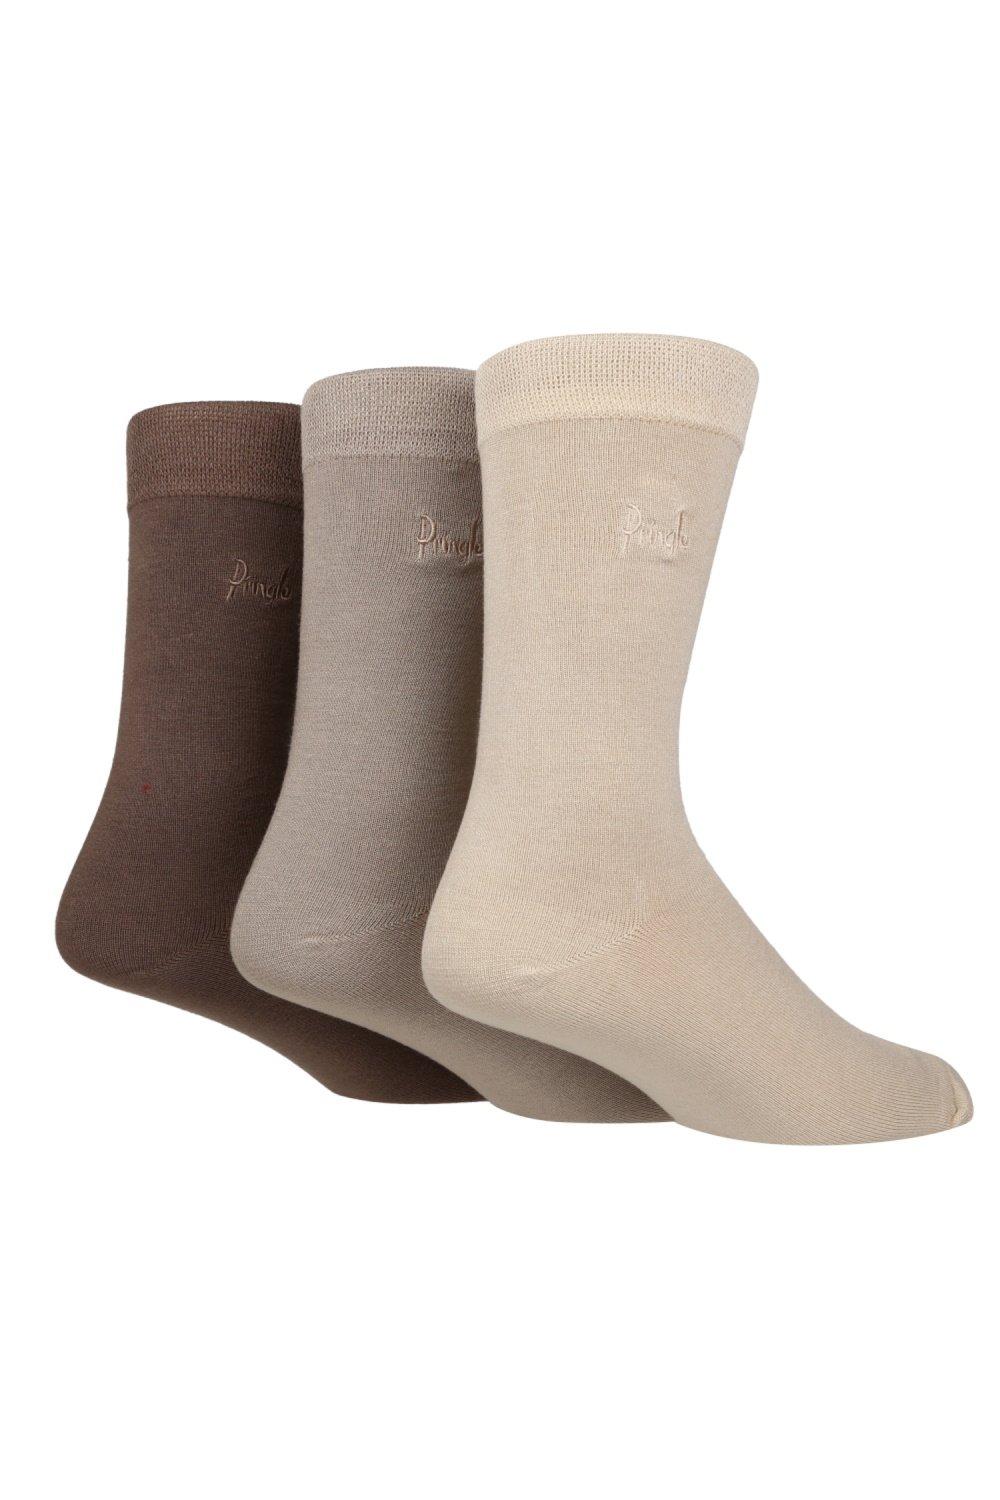 3 Pair Pack Bamboo Comfort Cuff Socks